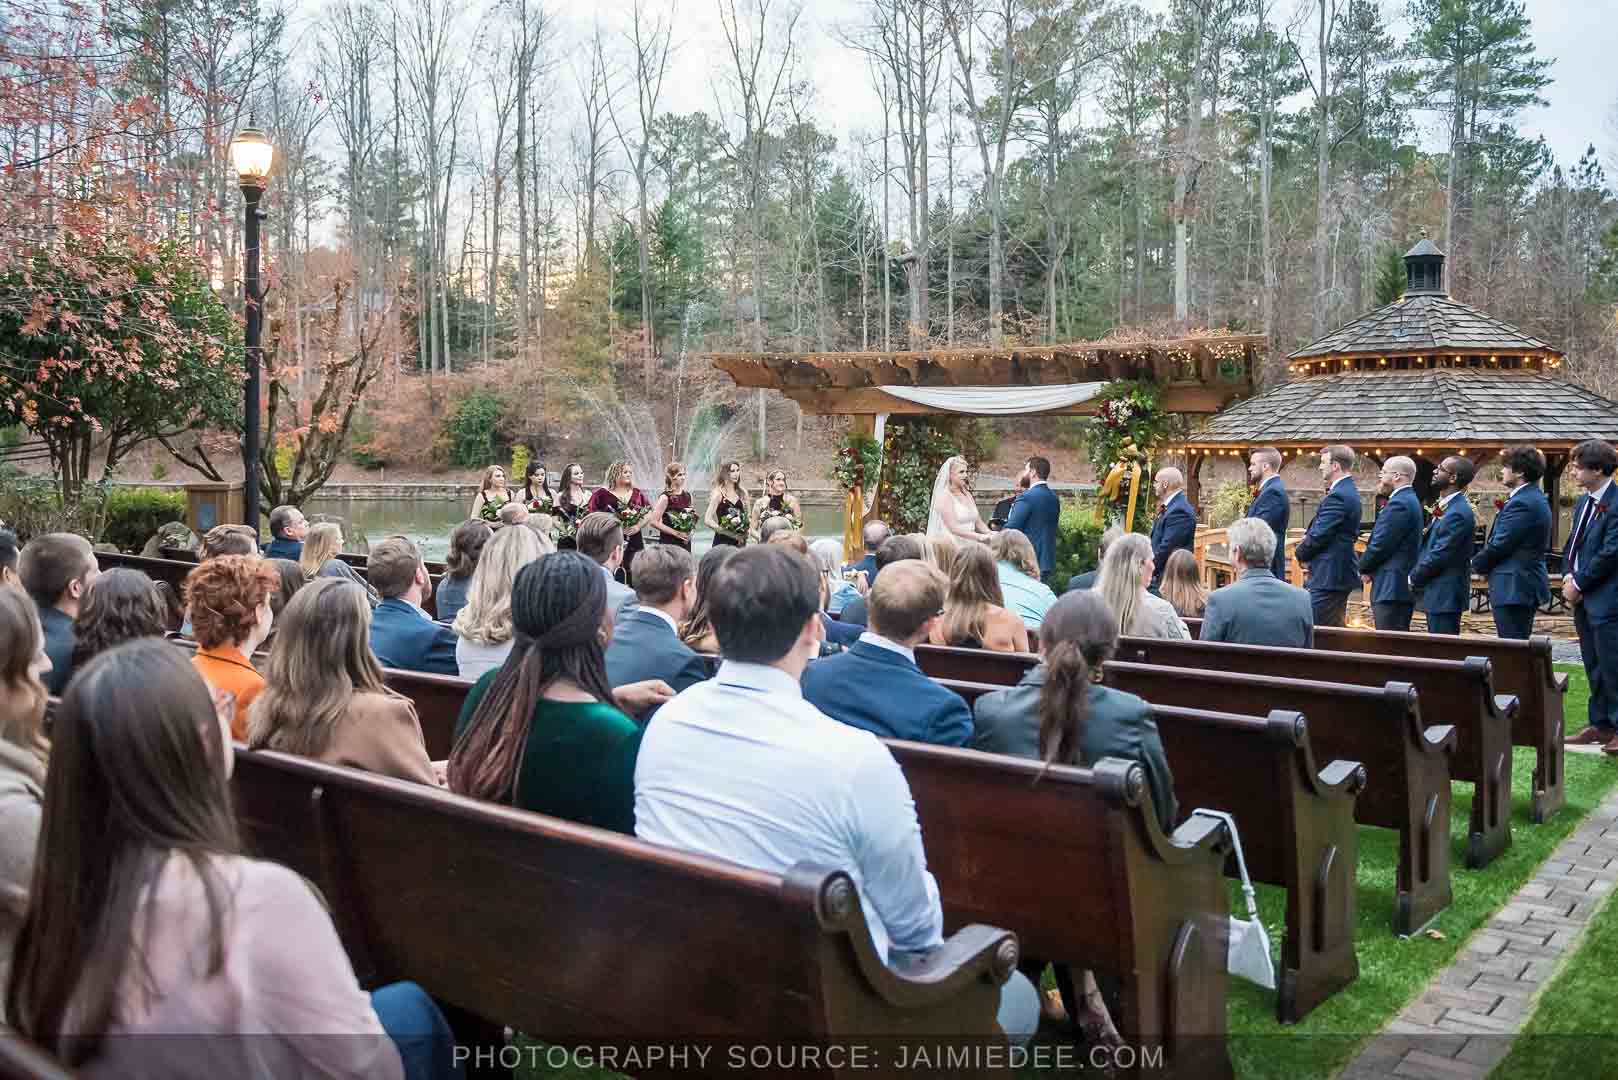 Rocky's Lake Estate Wedding Venue - Wedding ceremony - full view of ceremony site